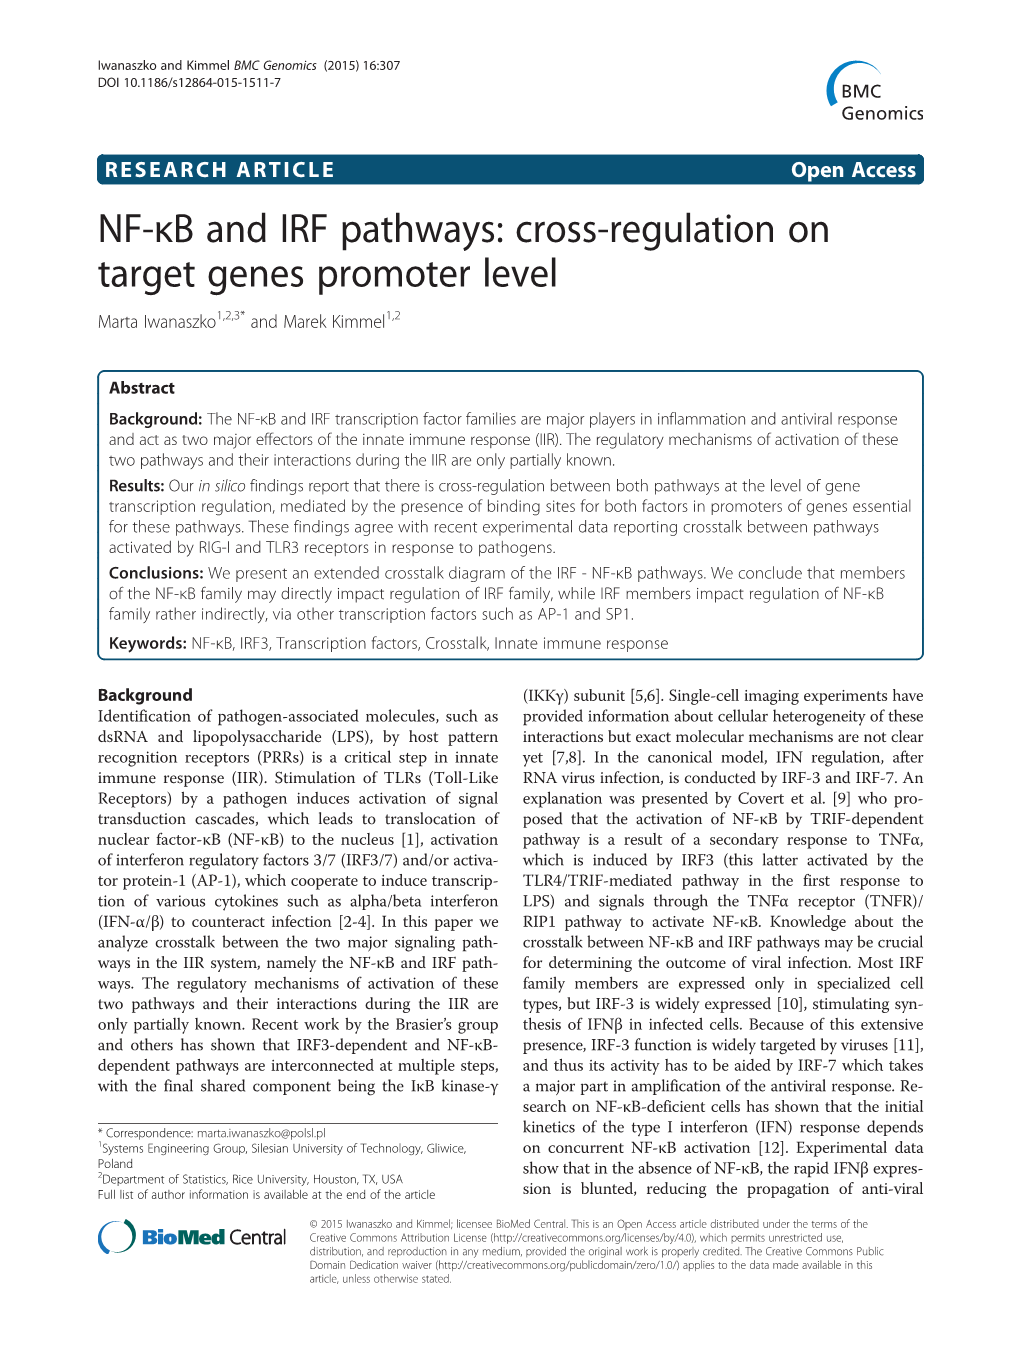 NF-Κb and IRF Pathways: Cross-Regulation on Target Genes Promoter Level Marta Iwanaszko1,2,3* and Marek Kimmel1,2